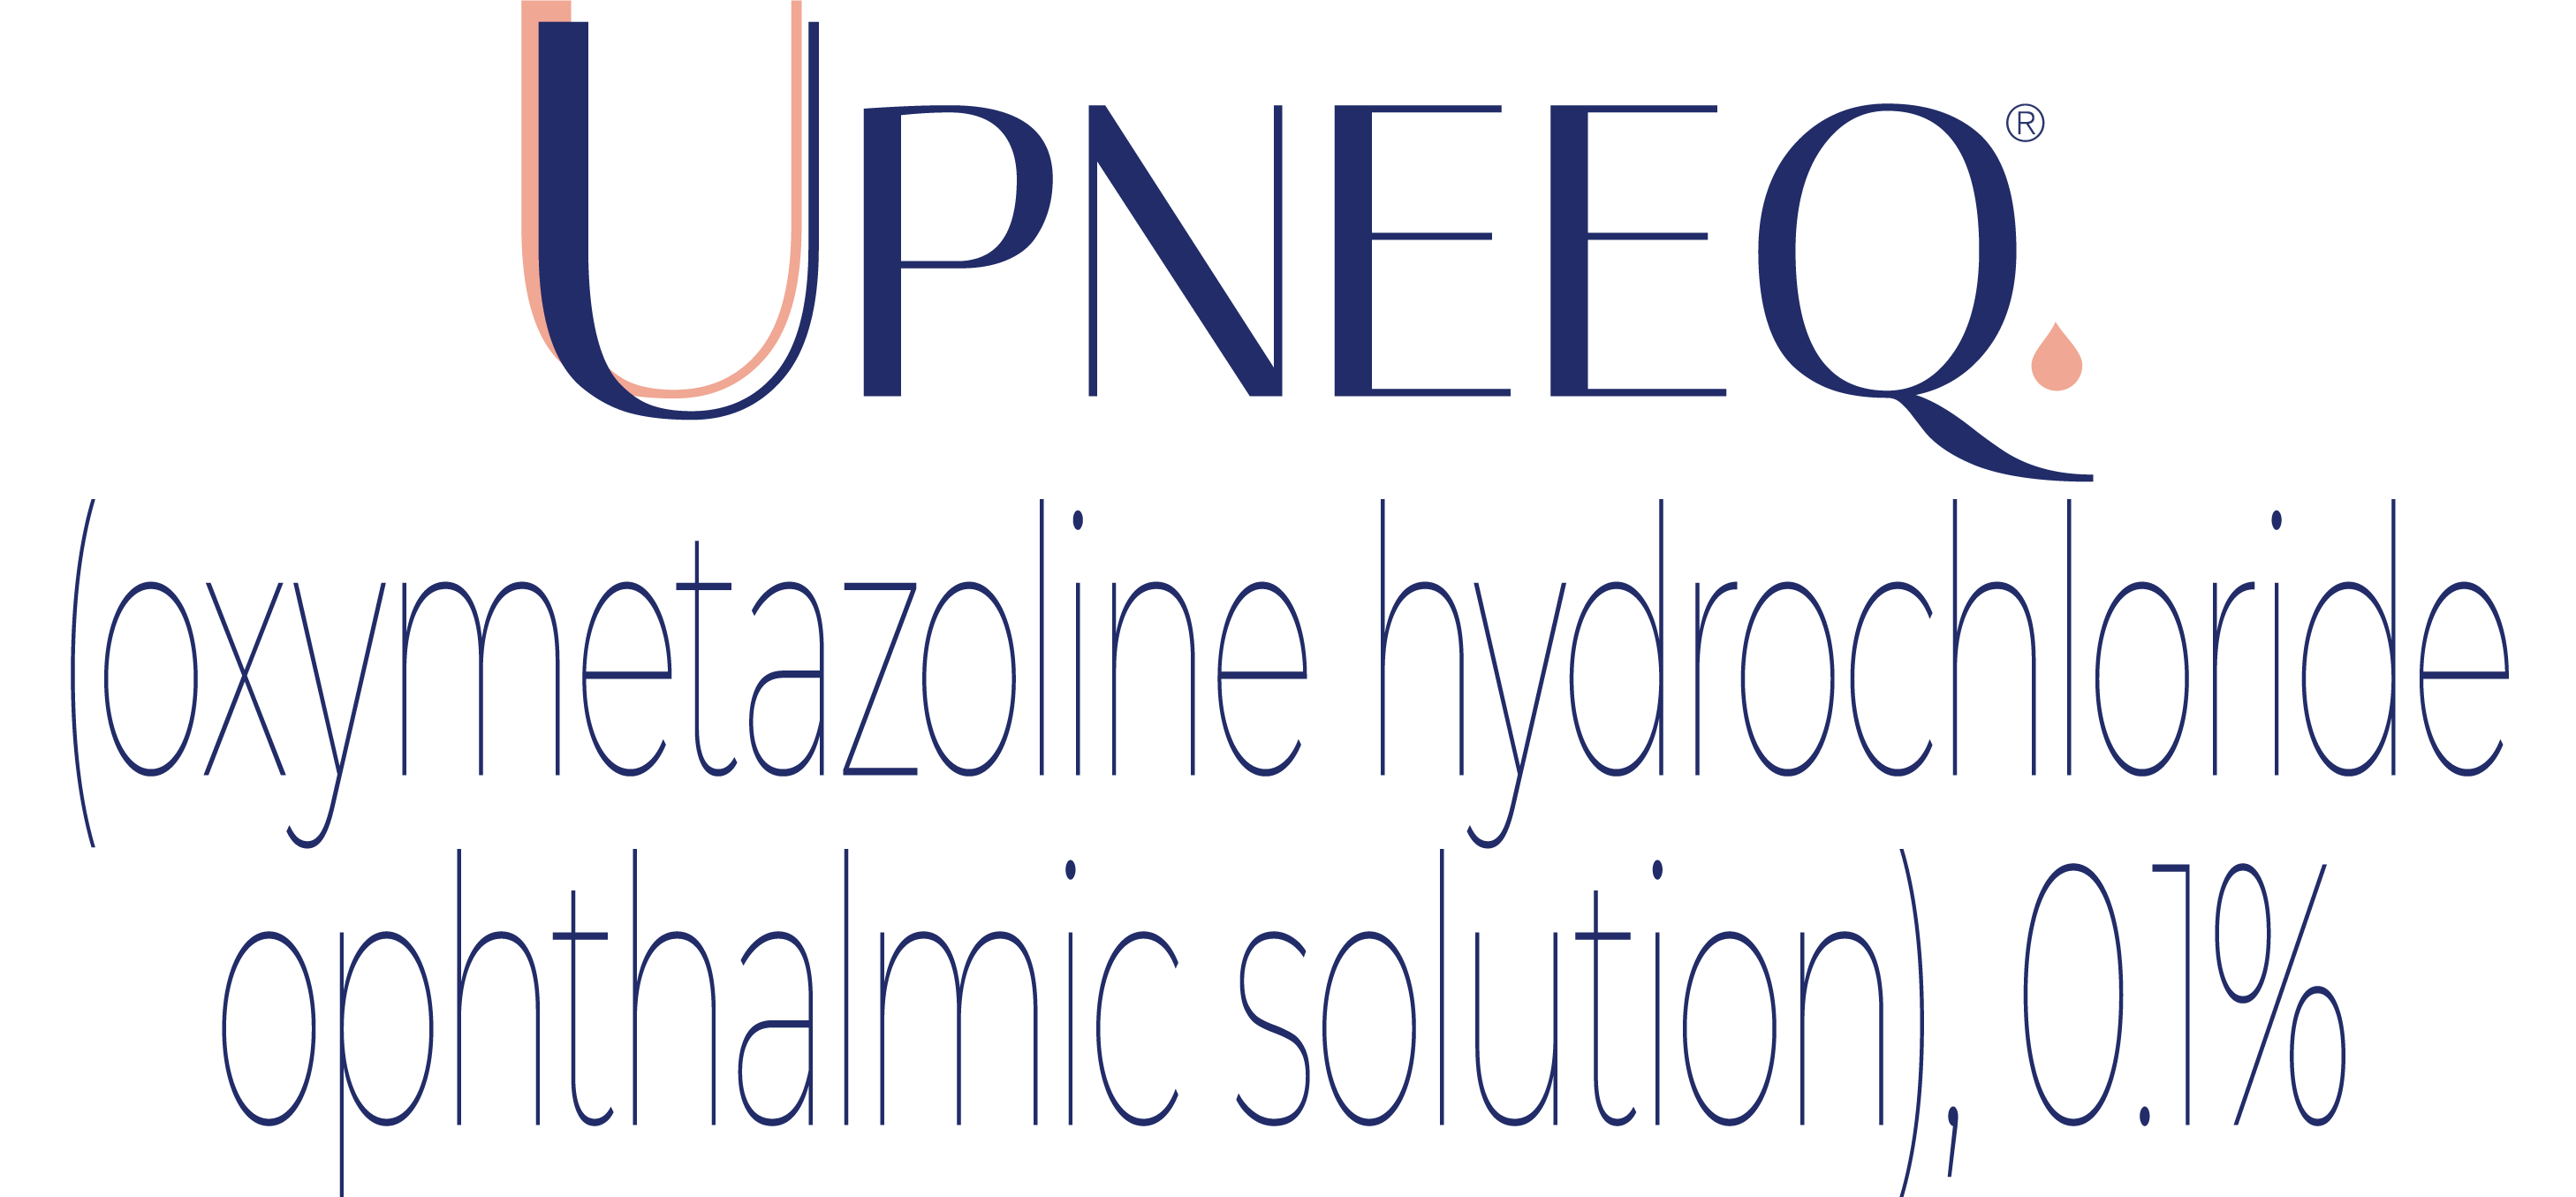 Upneeq Logo | GloDerma Aesthetics in Yardley, PA